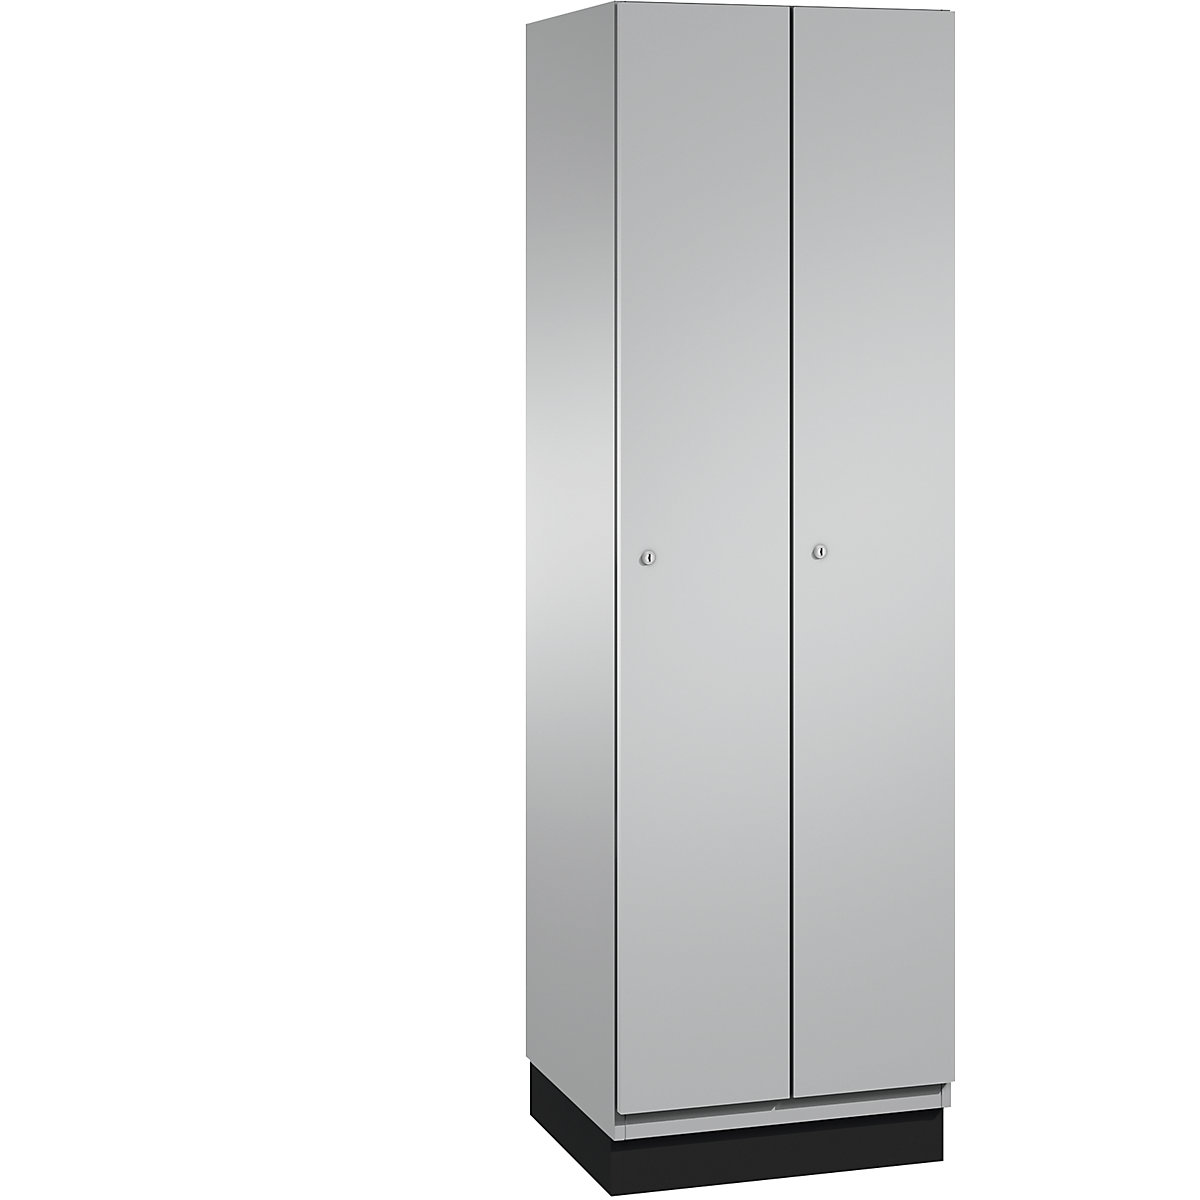 CAMBIO cloakroom locker with sheet steel doors – C+P, 2 compartments, 600 mm wide, body white aluminium / door white aluminium-11